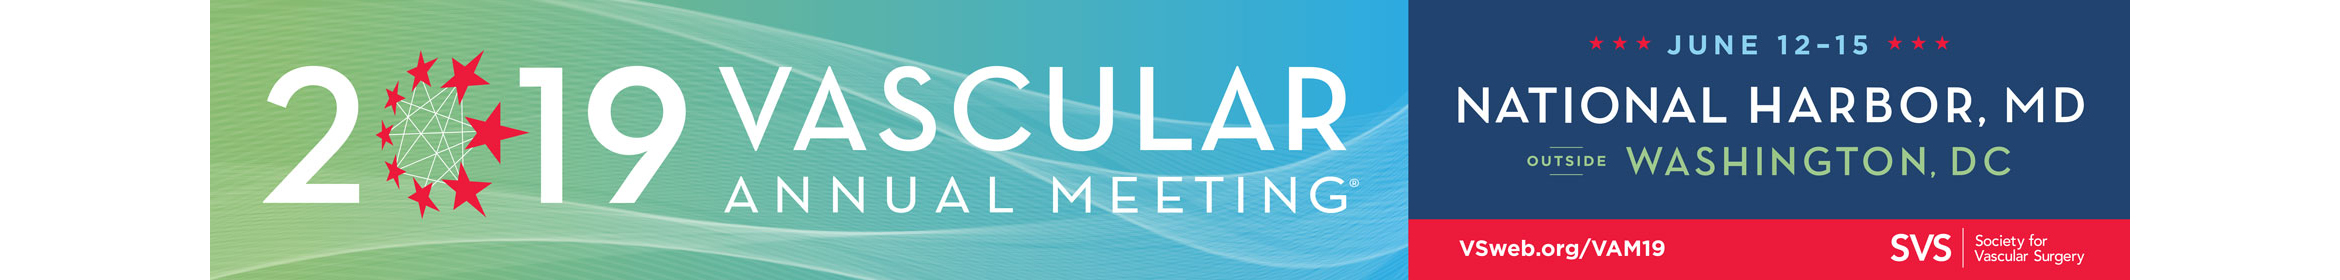 2019 Vascular Annual Meeting Main banner